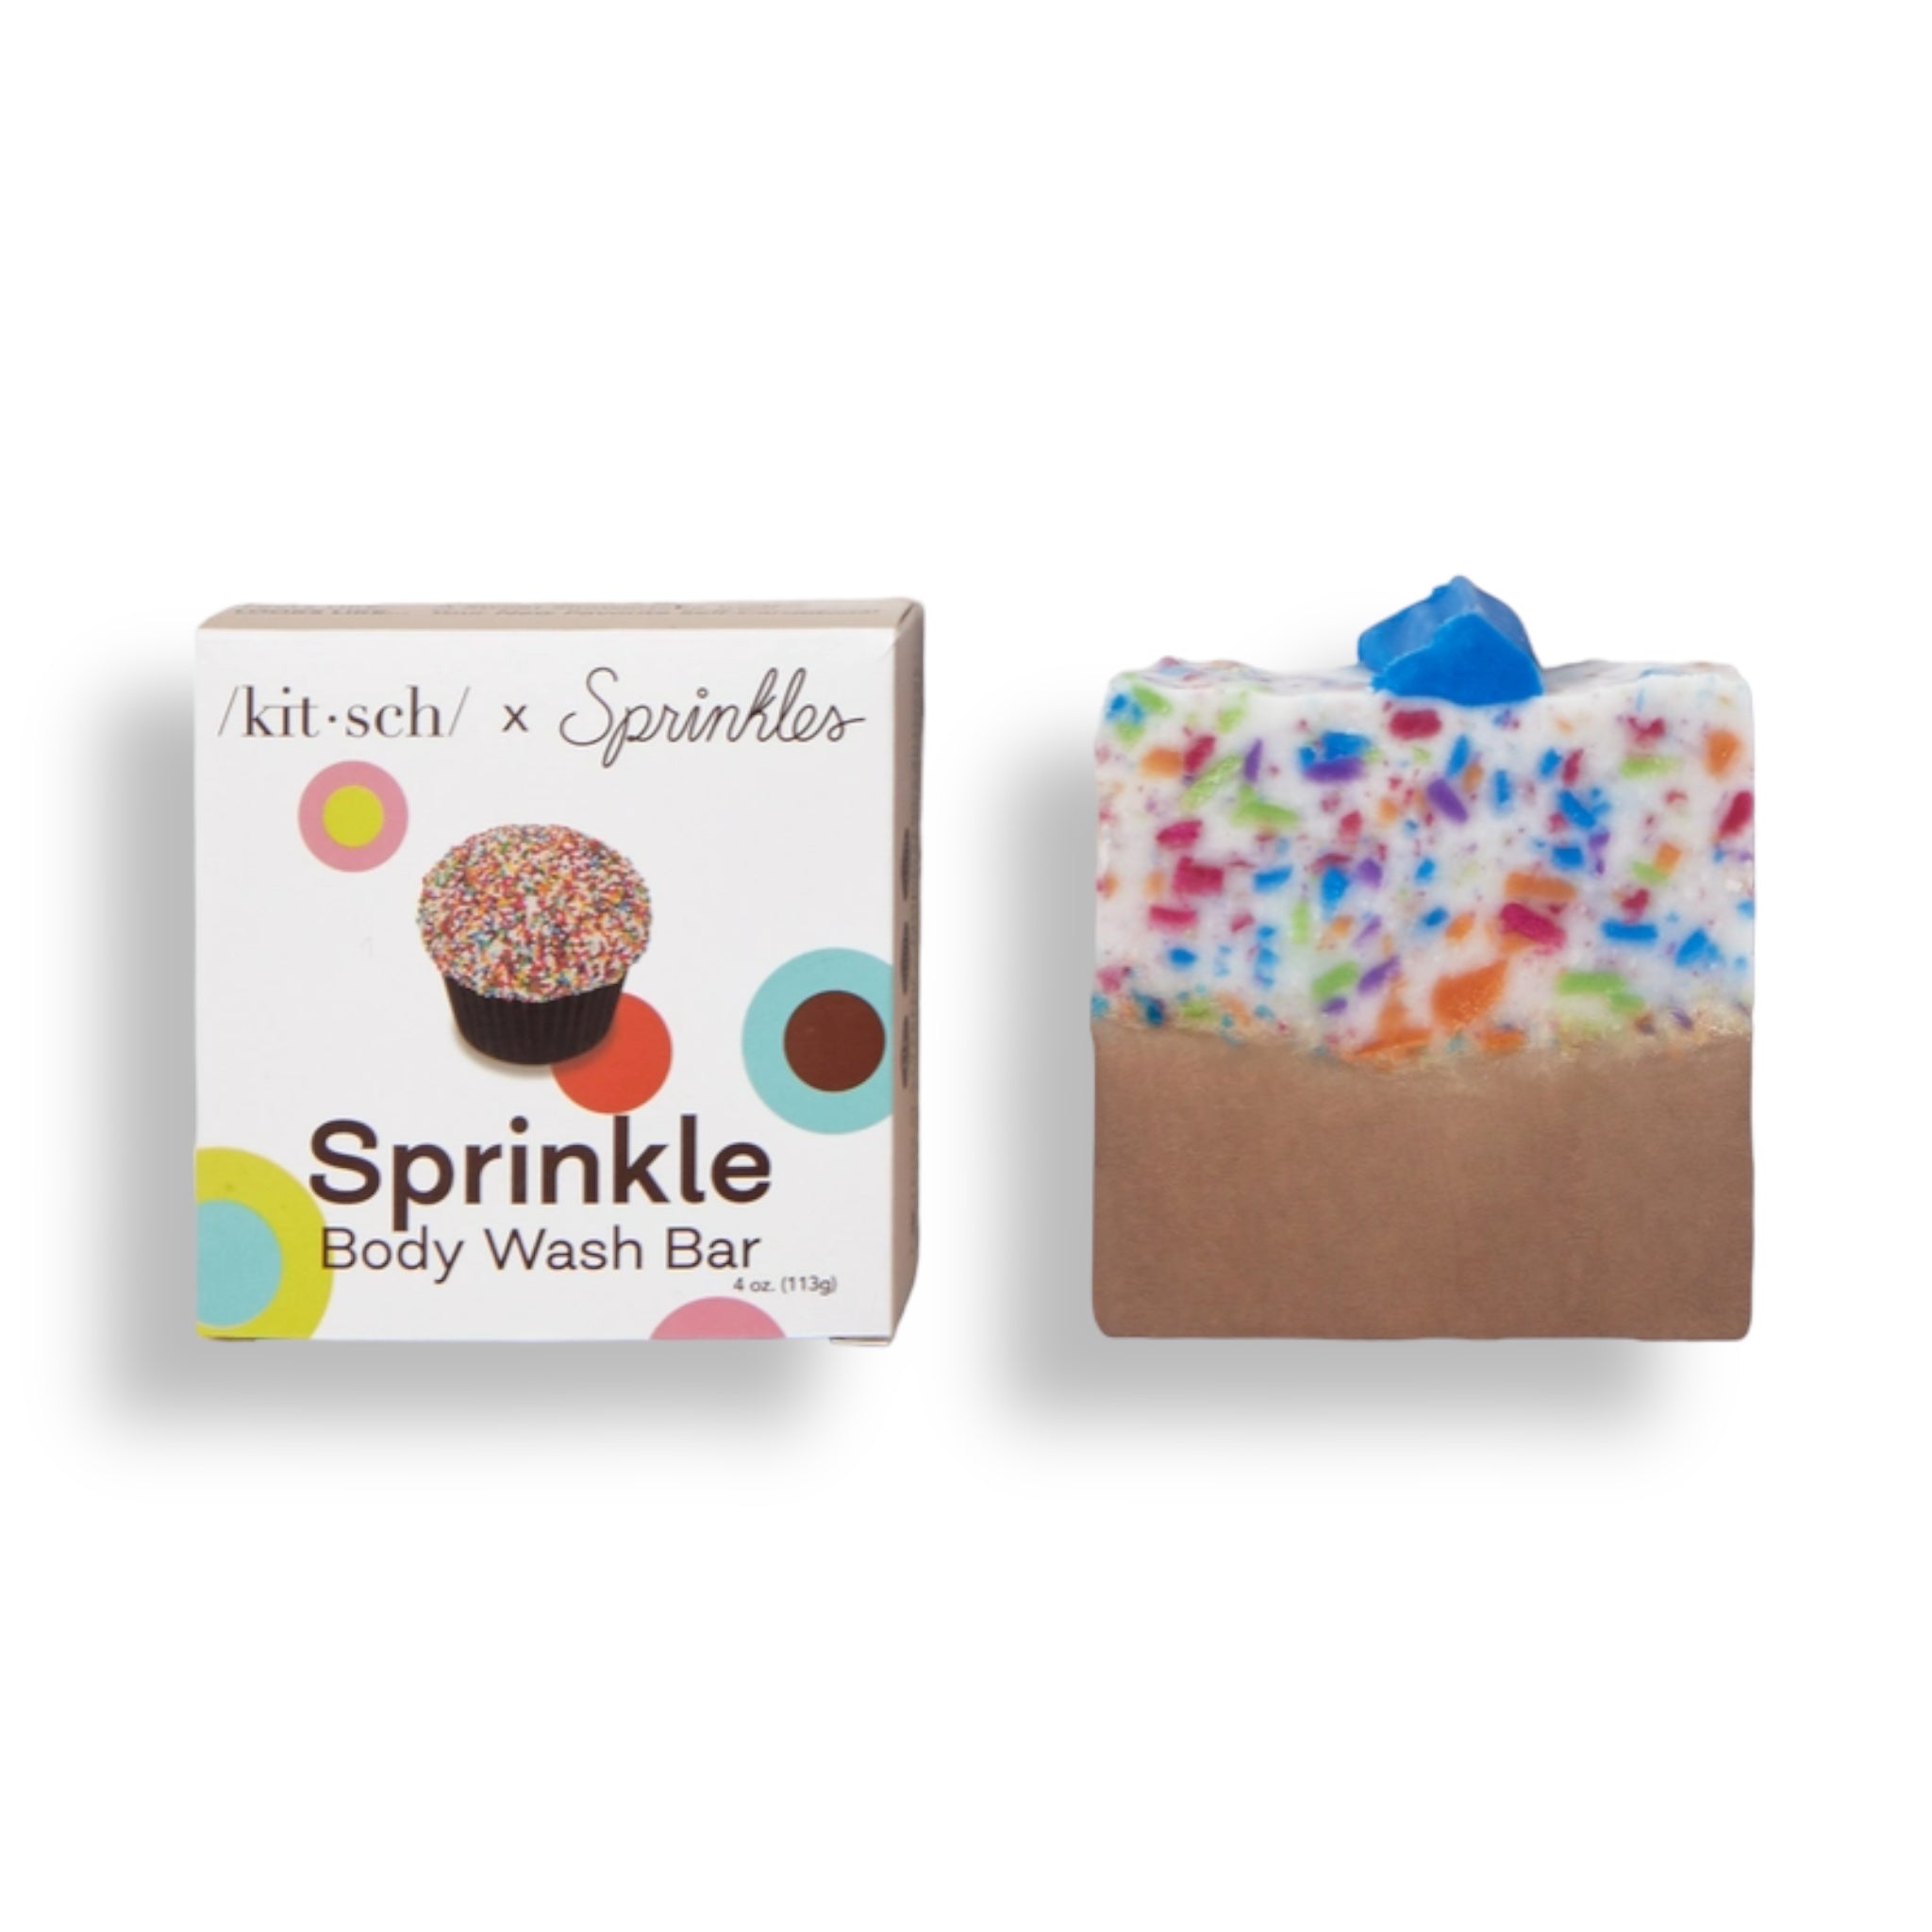 Sprinkles Cupcakes X Kitsch 3 Pc Soap Set Body Wash Bars